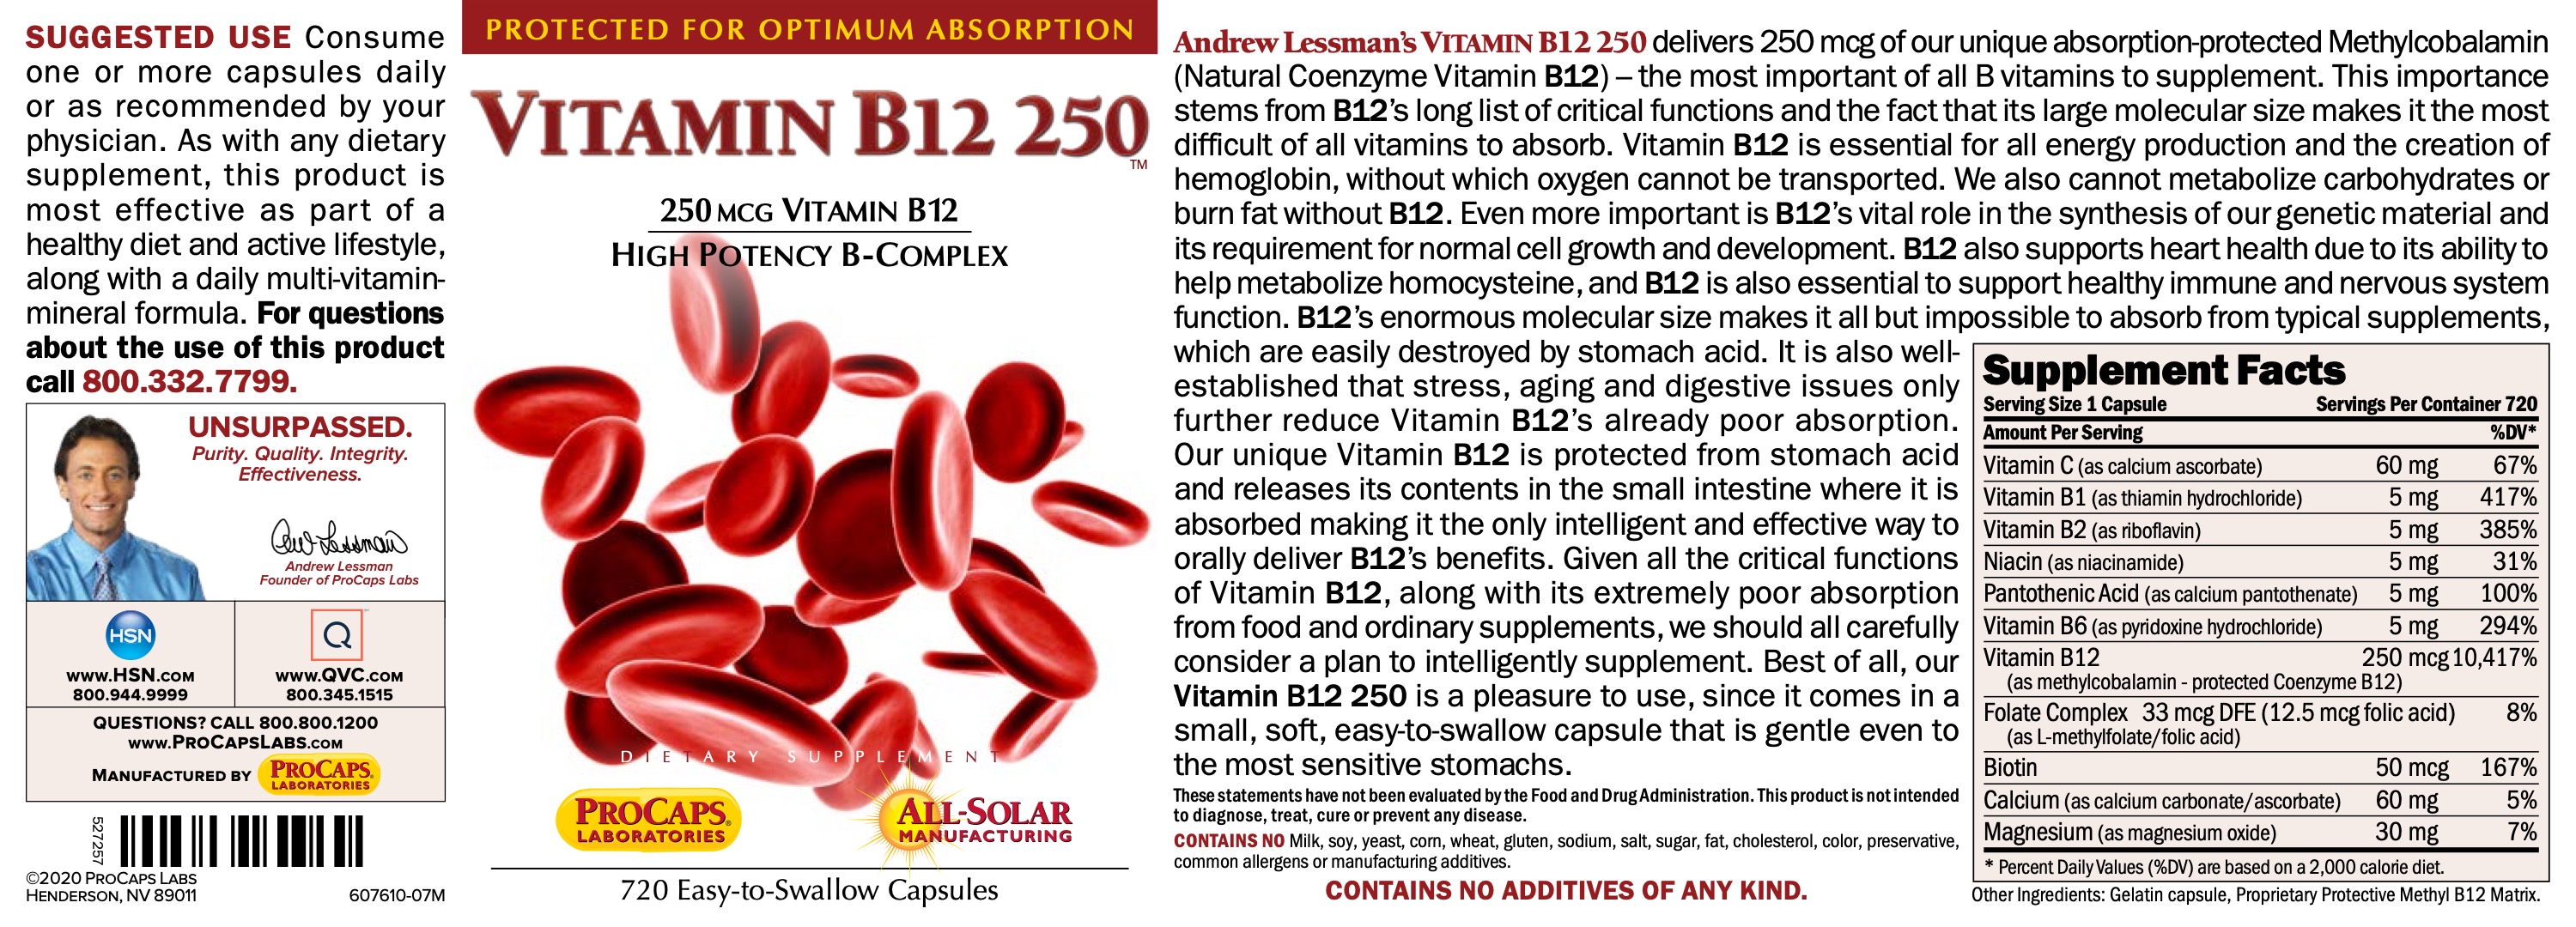 Vitamin-B12-250-Capsules-Vitamin-Separates